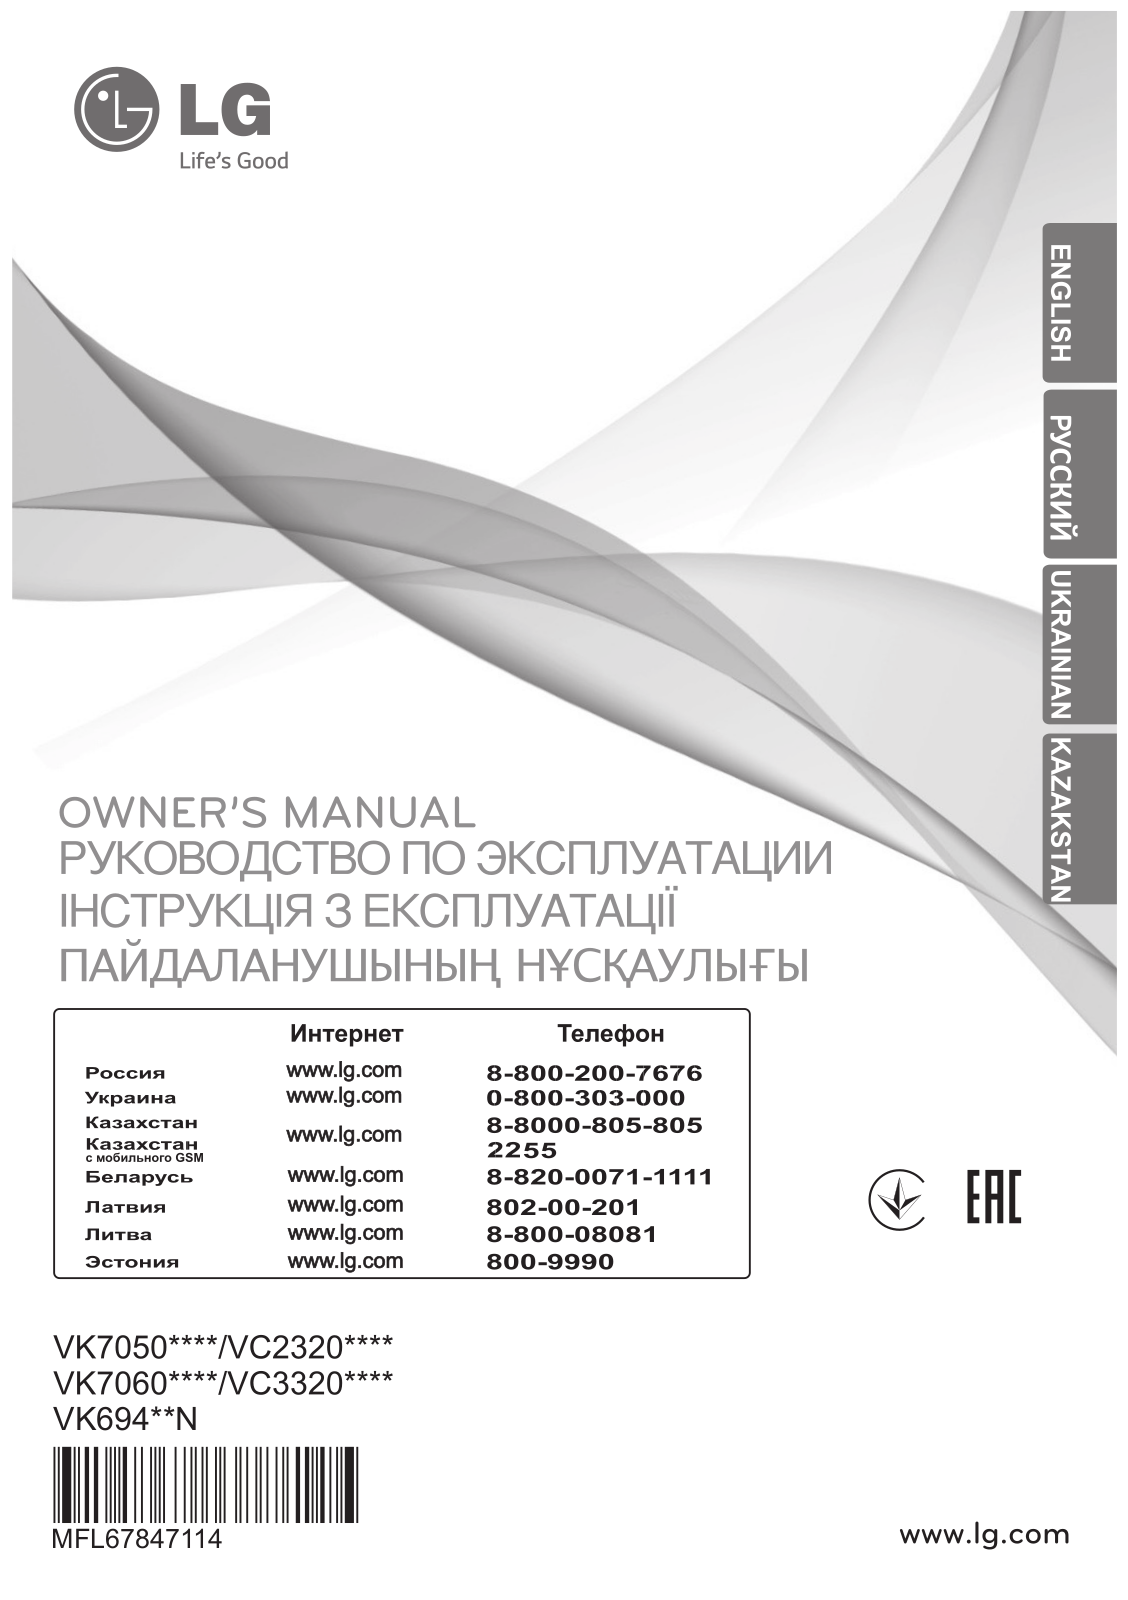 LG VK69402N User Manual